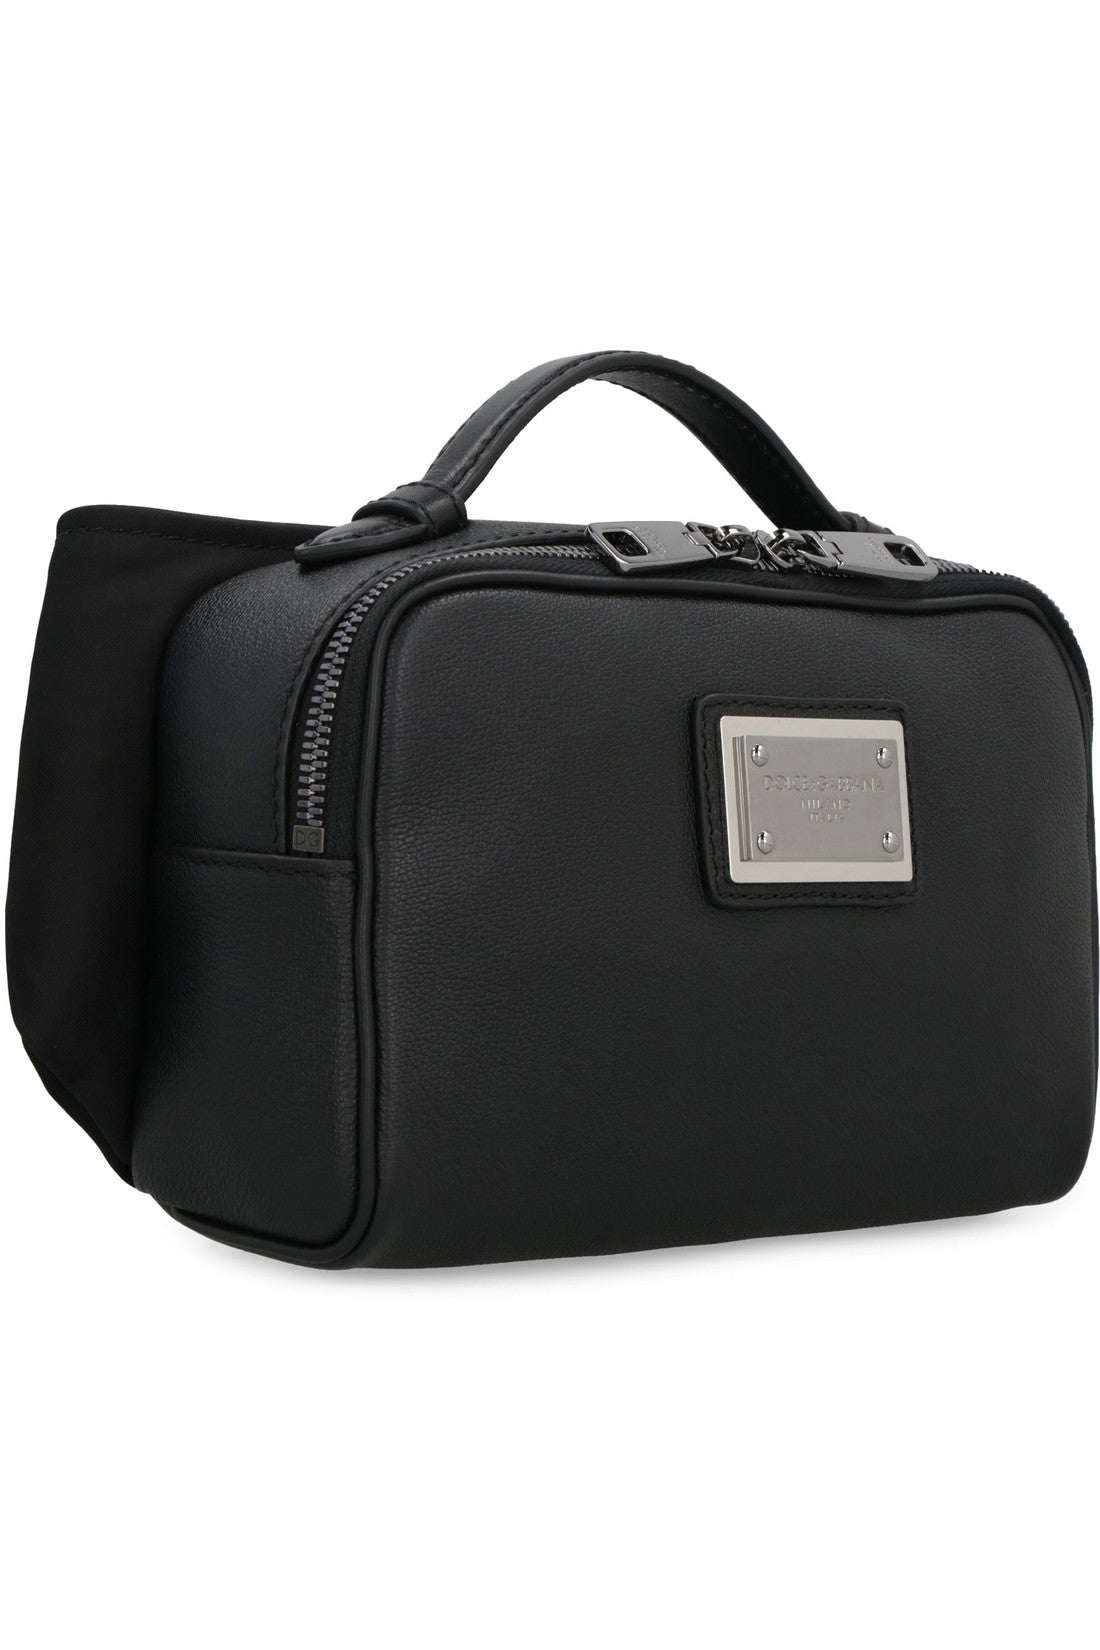 Dolce & Gabbana-OUTLET-SALE-Leather belt bag with logo-ARCHIVIST